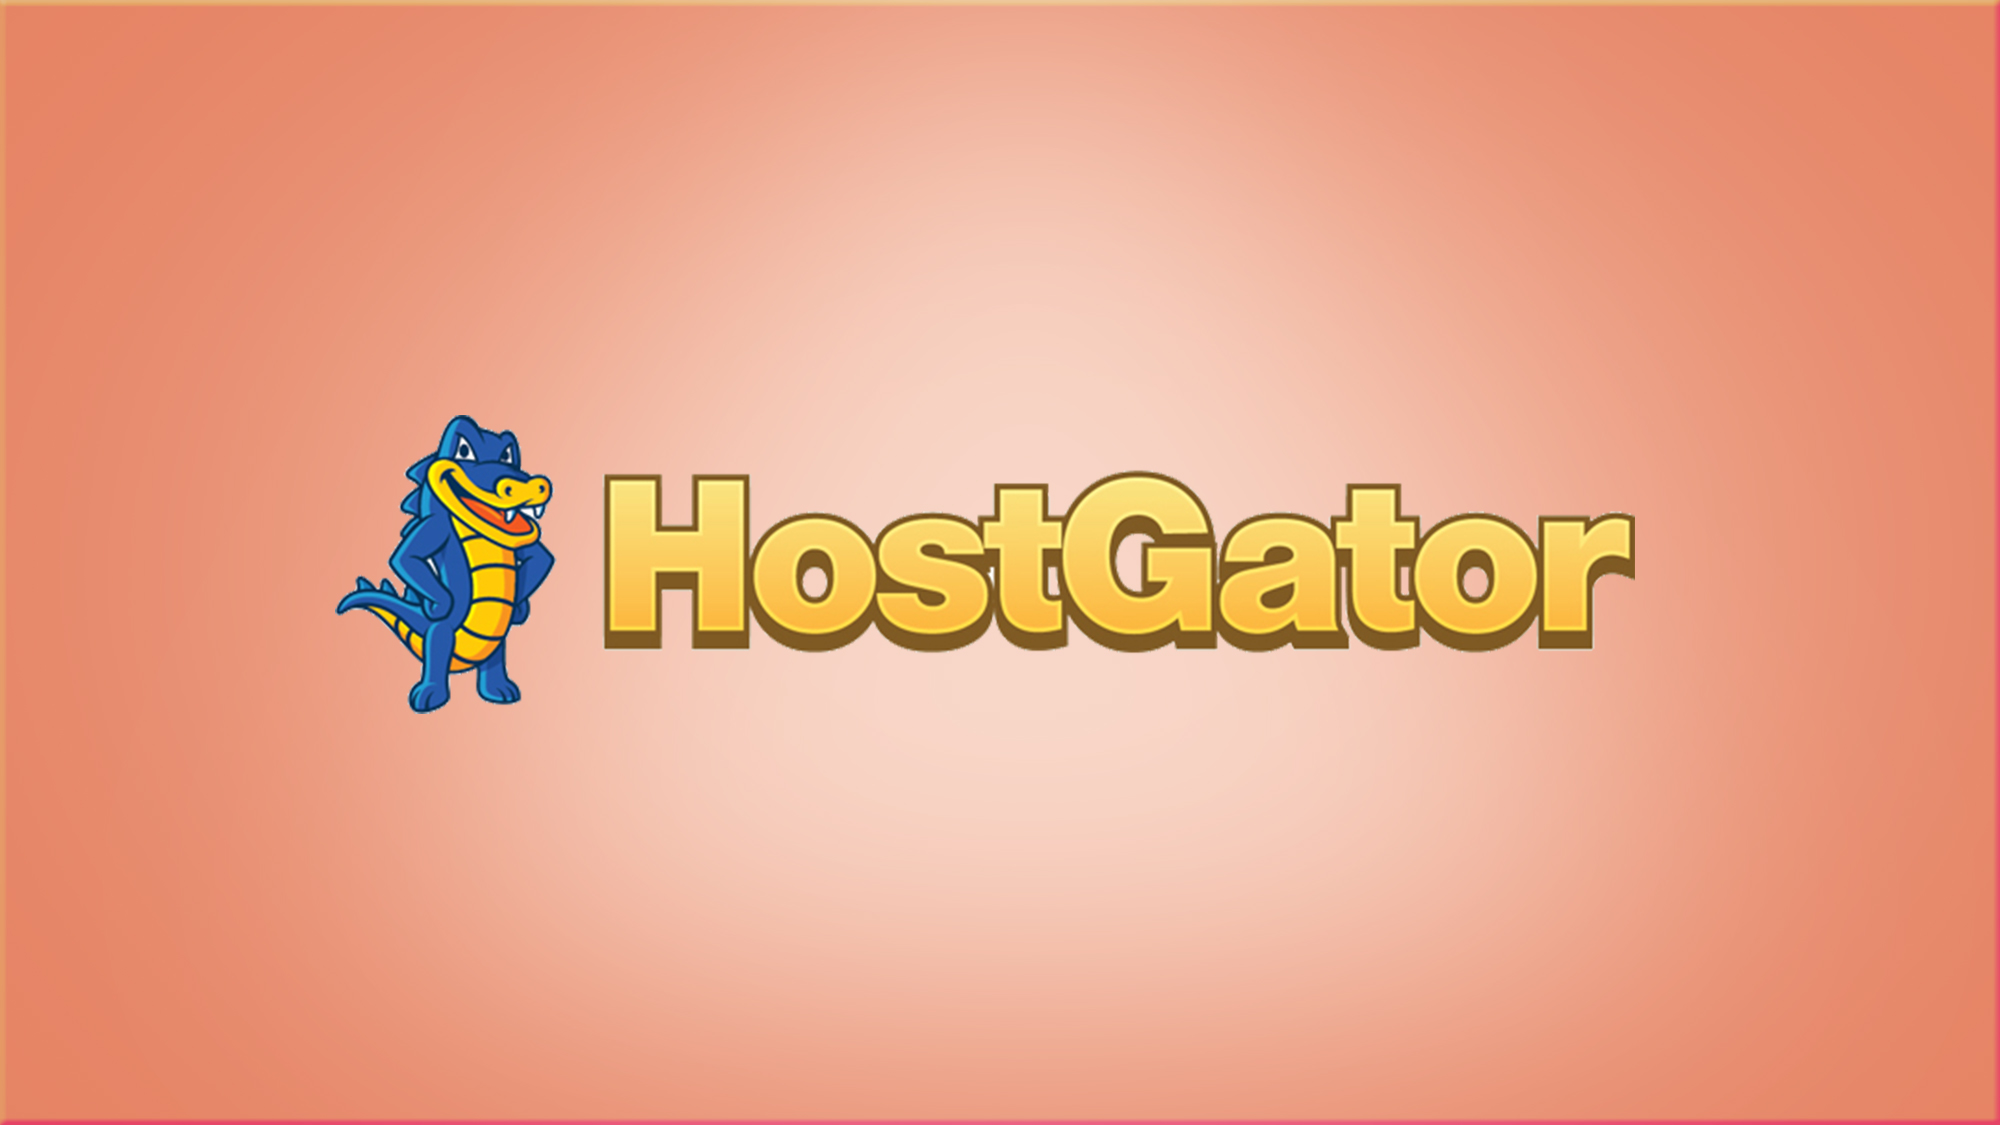 HostGator logo on peach background with spotlight effect